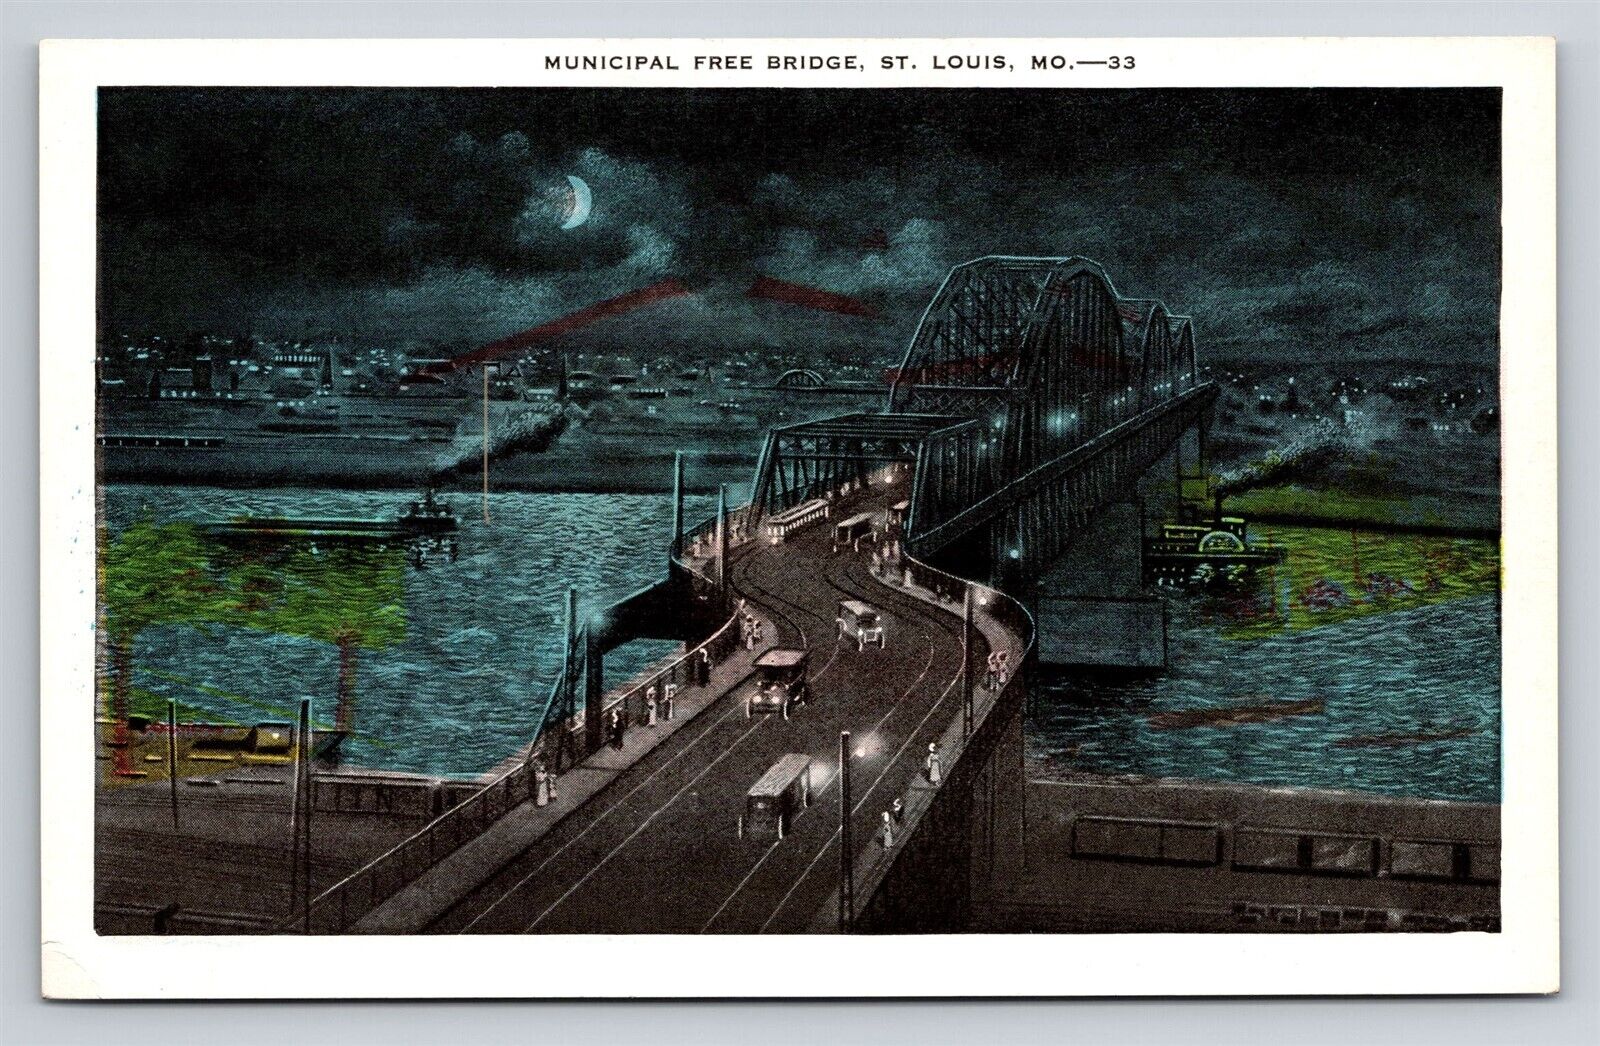 St. Louis MO Municipal Free Bridge Night View Old Vintage Postcard circa 1920s